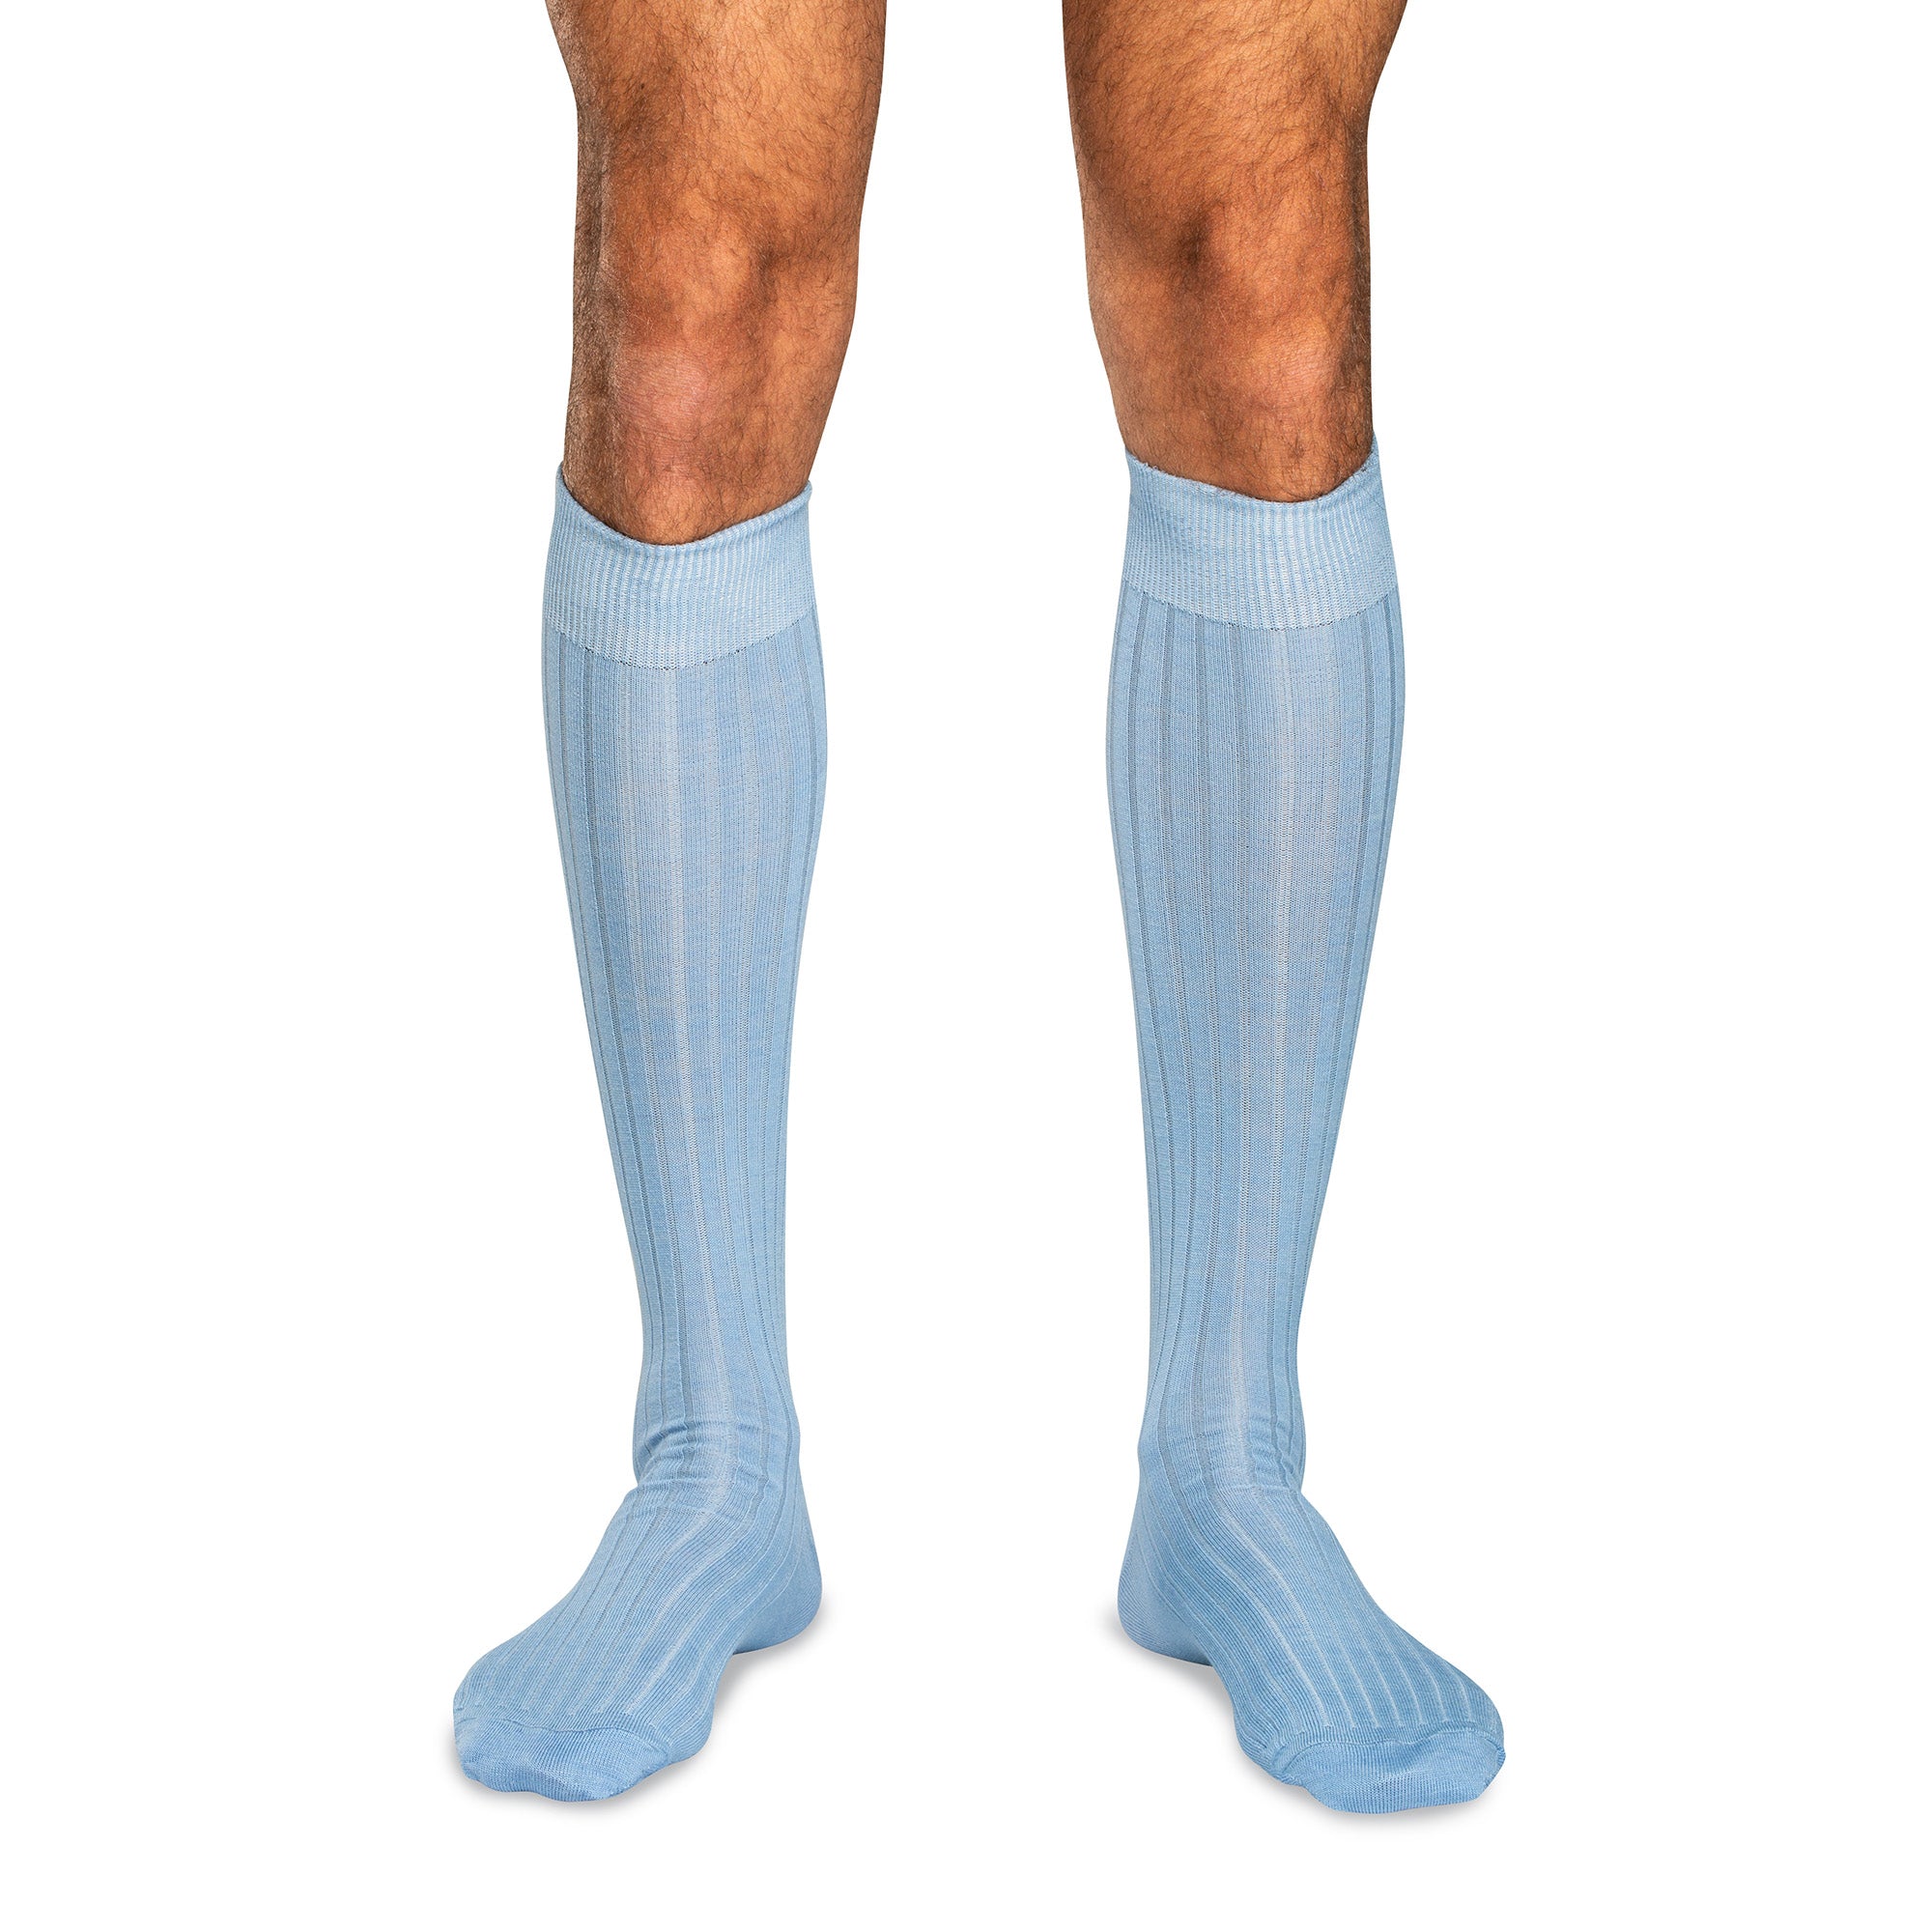 model wearing light blue wool over the calf dress socks